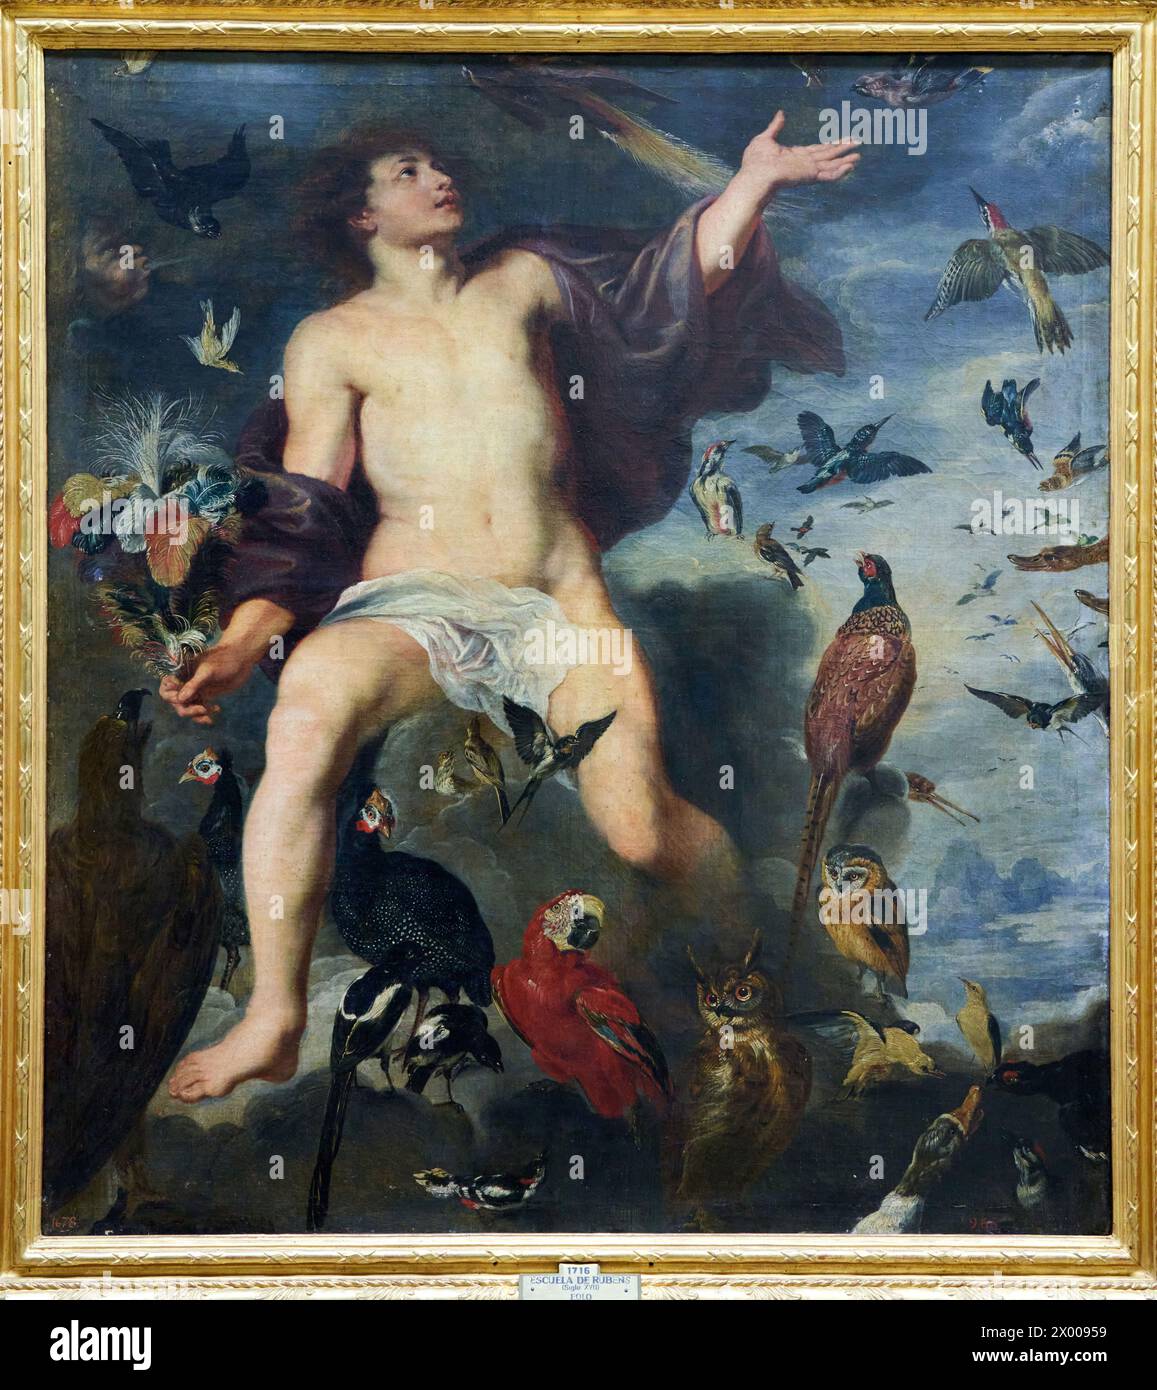 Pedro Pablo Rubens (Follower of). (Siegen, Westphalia, 1577 - Antwerp, 1640), Aeolus, early 17th century, Fine Arts Museum, Museo Bellas Artes, Oviedo, Asturias, Spain. Stock Photo